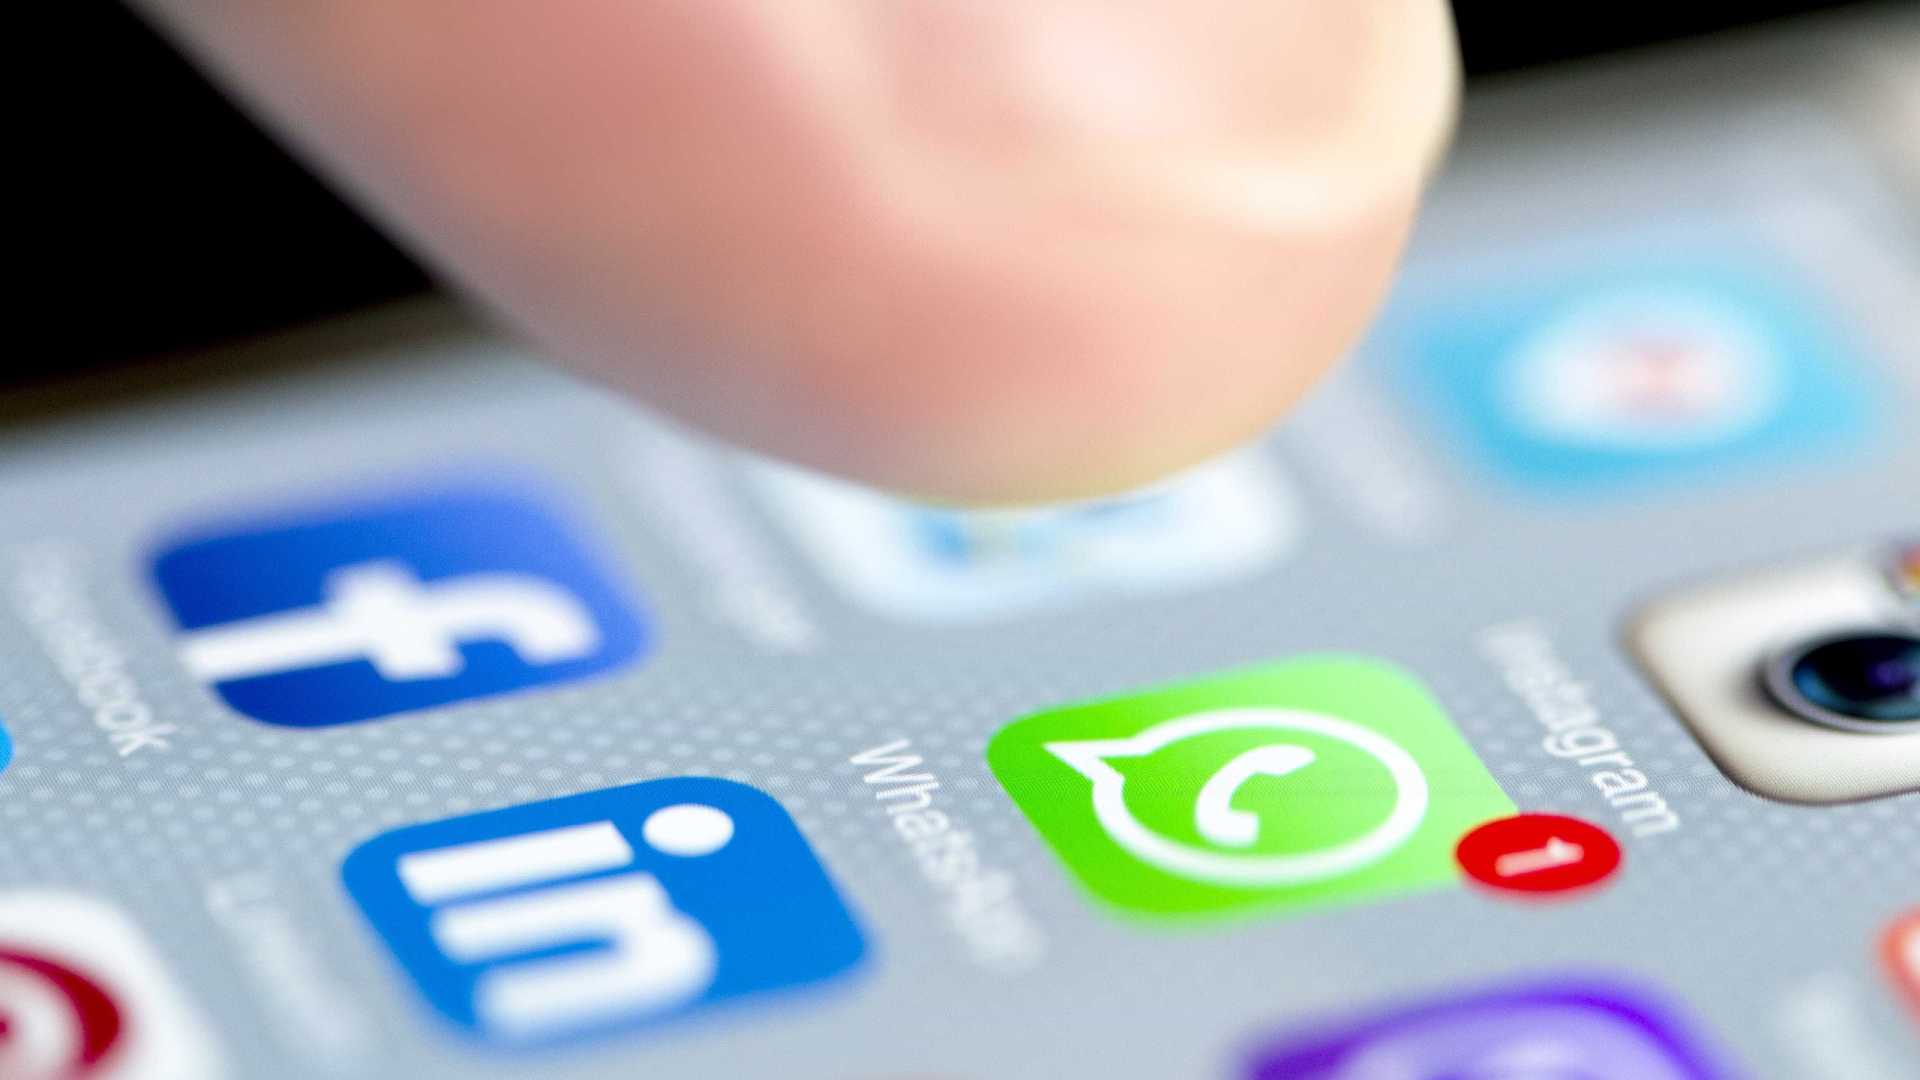 Novo golpe no WhatsApp promete resgate de R$ 1.900 do FGTS